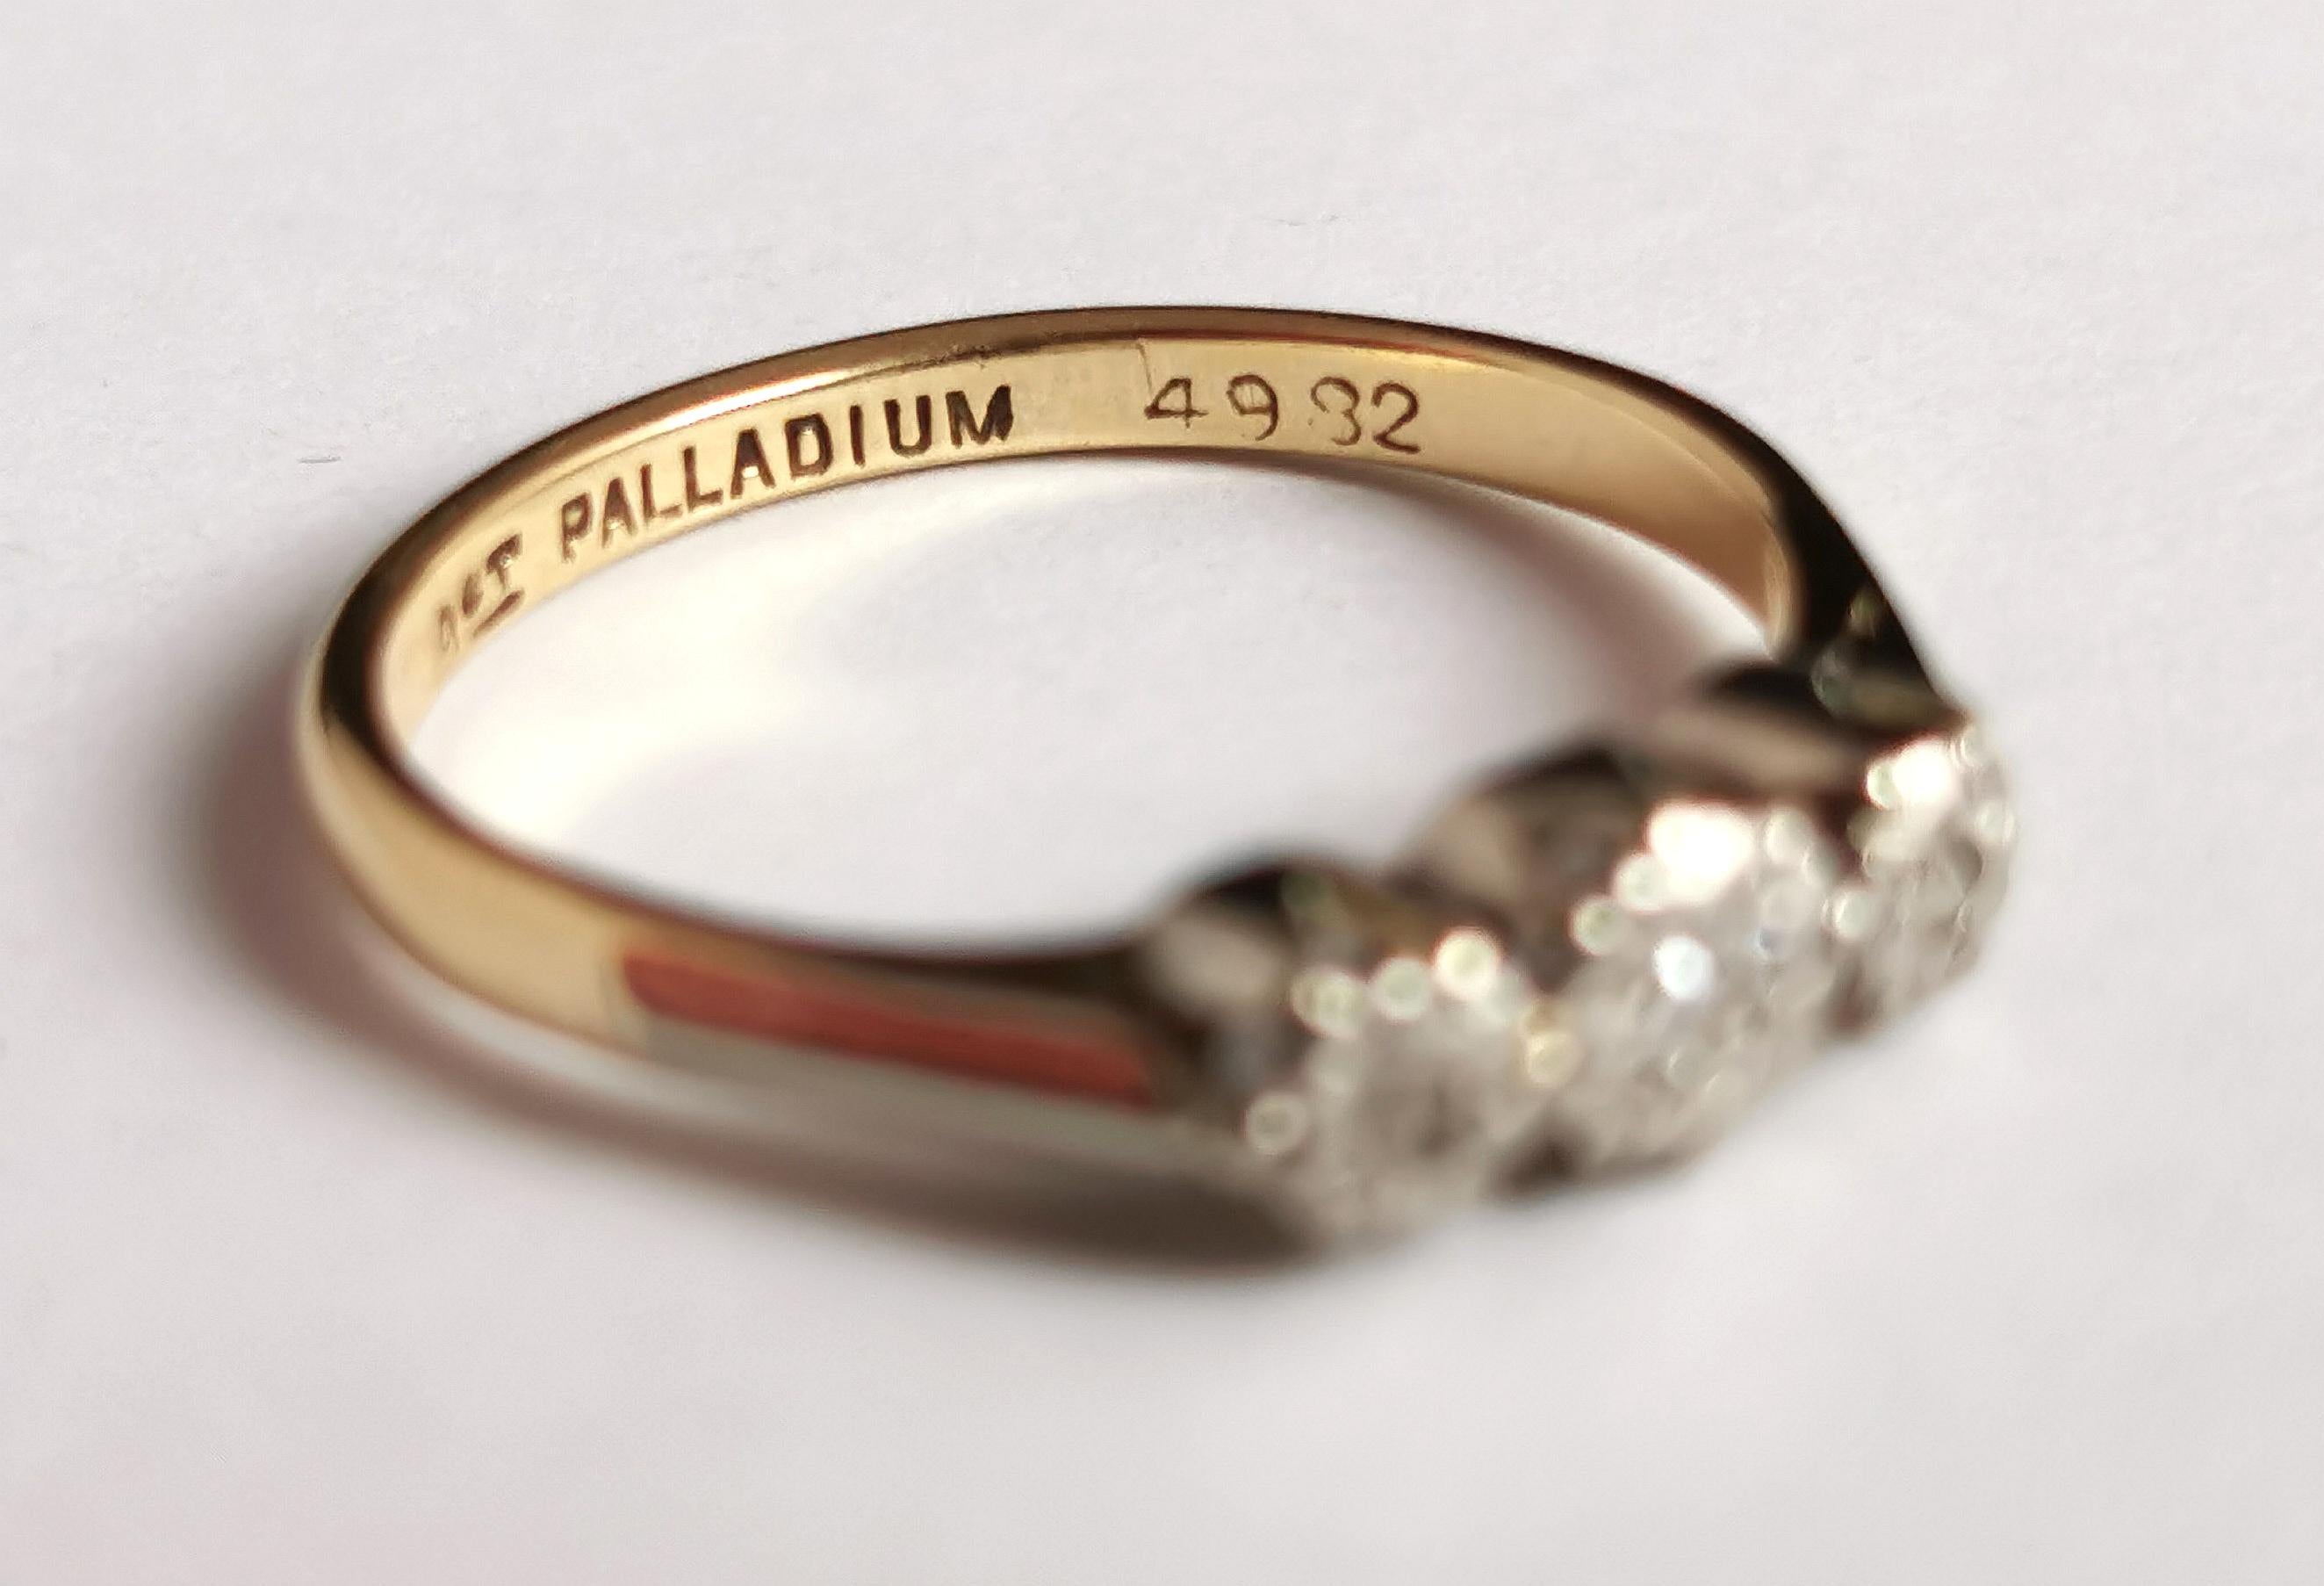 Vintage Art Deco Three Stone Diamond Ring, 9k Gold and Palladium For Sale 5